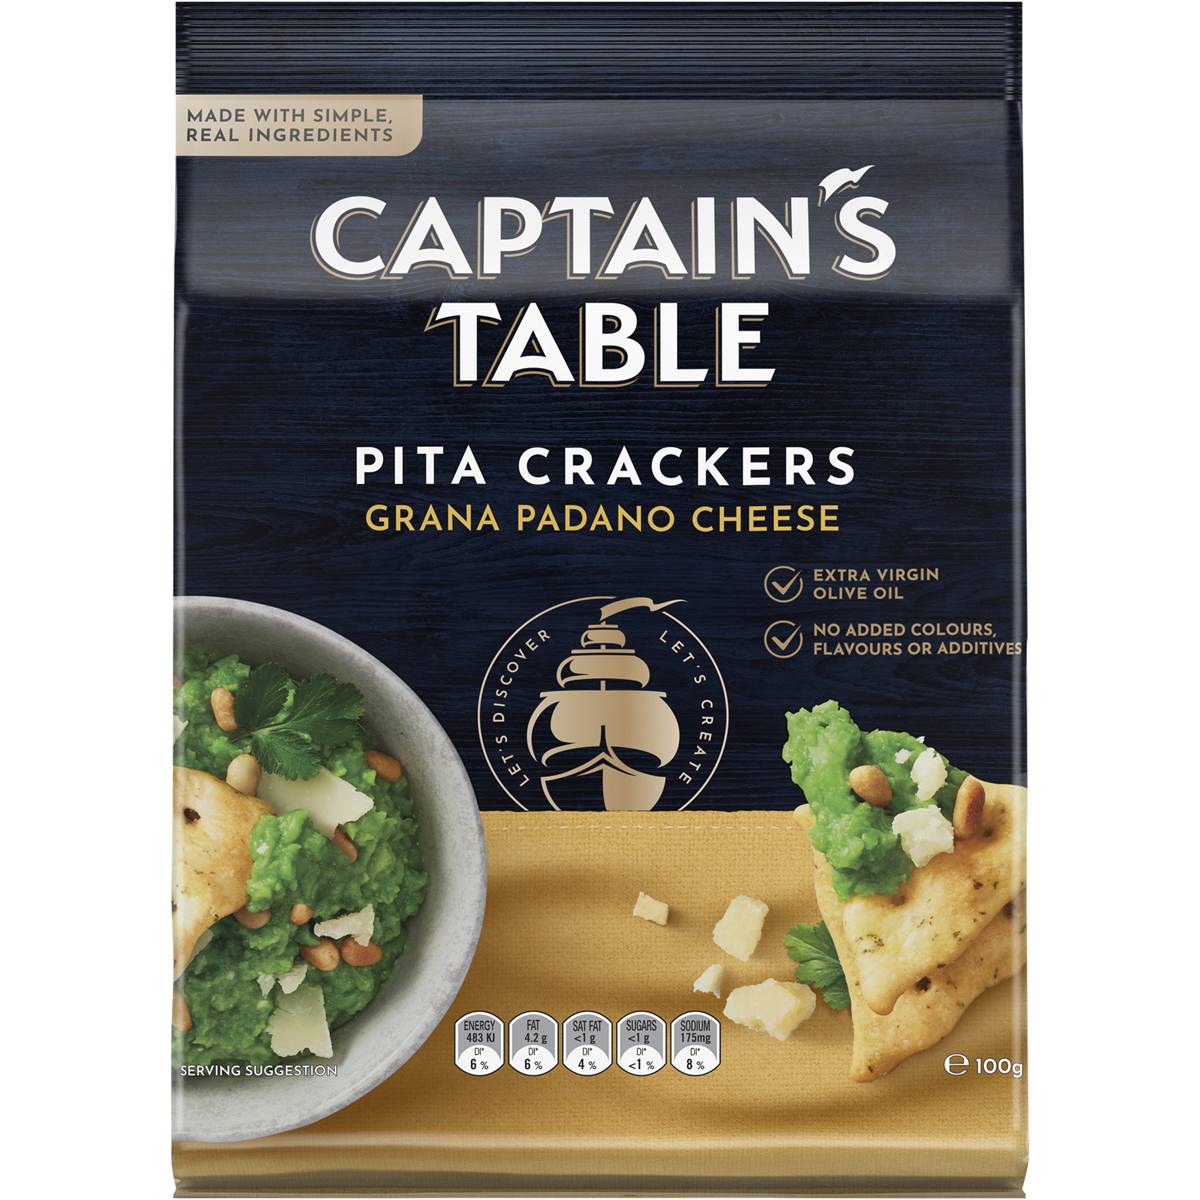 Calories in Captain's Table Pita Crackers Grana Padano Cheese